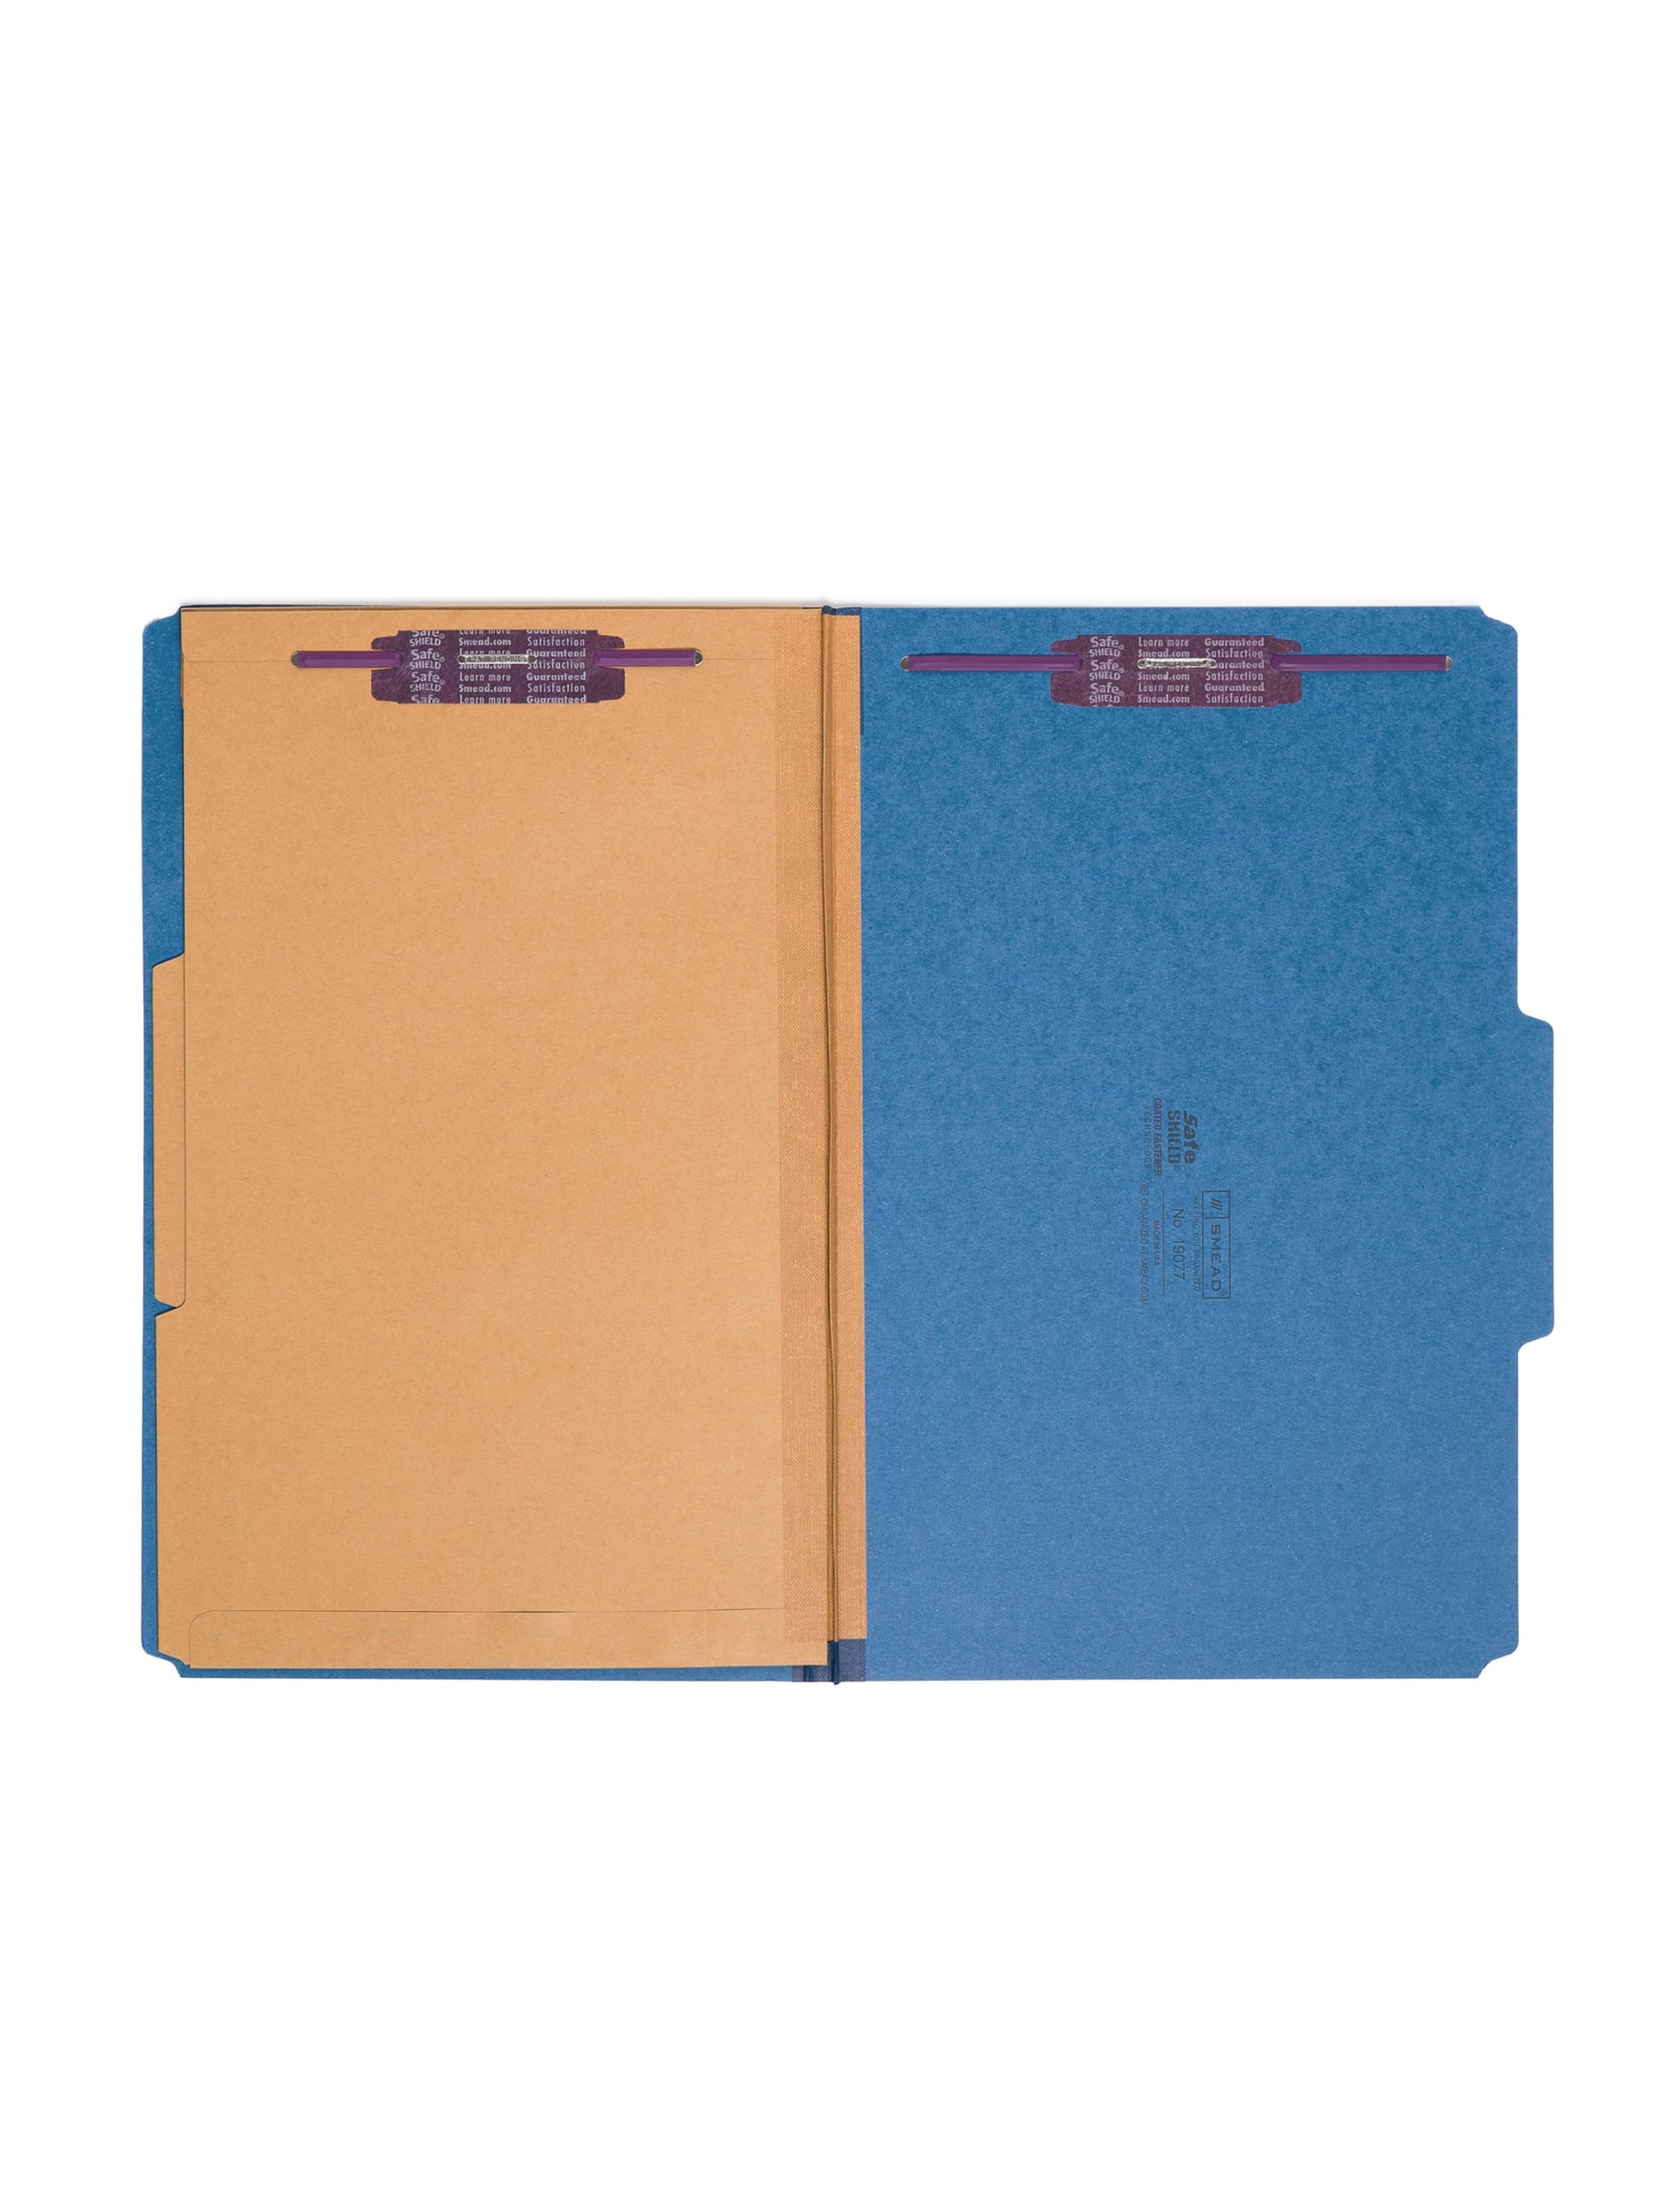 SafeSHIELD® Pressboard Classification File Folders with Pocket Dividers, Dark Blue Color, Legal Size, Set of 0, 30086486190771